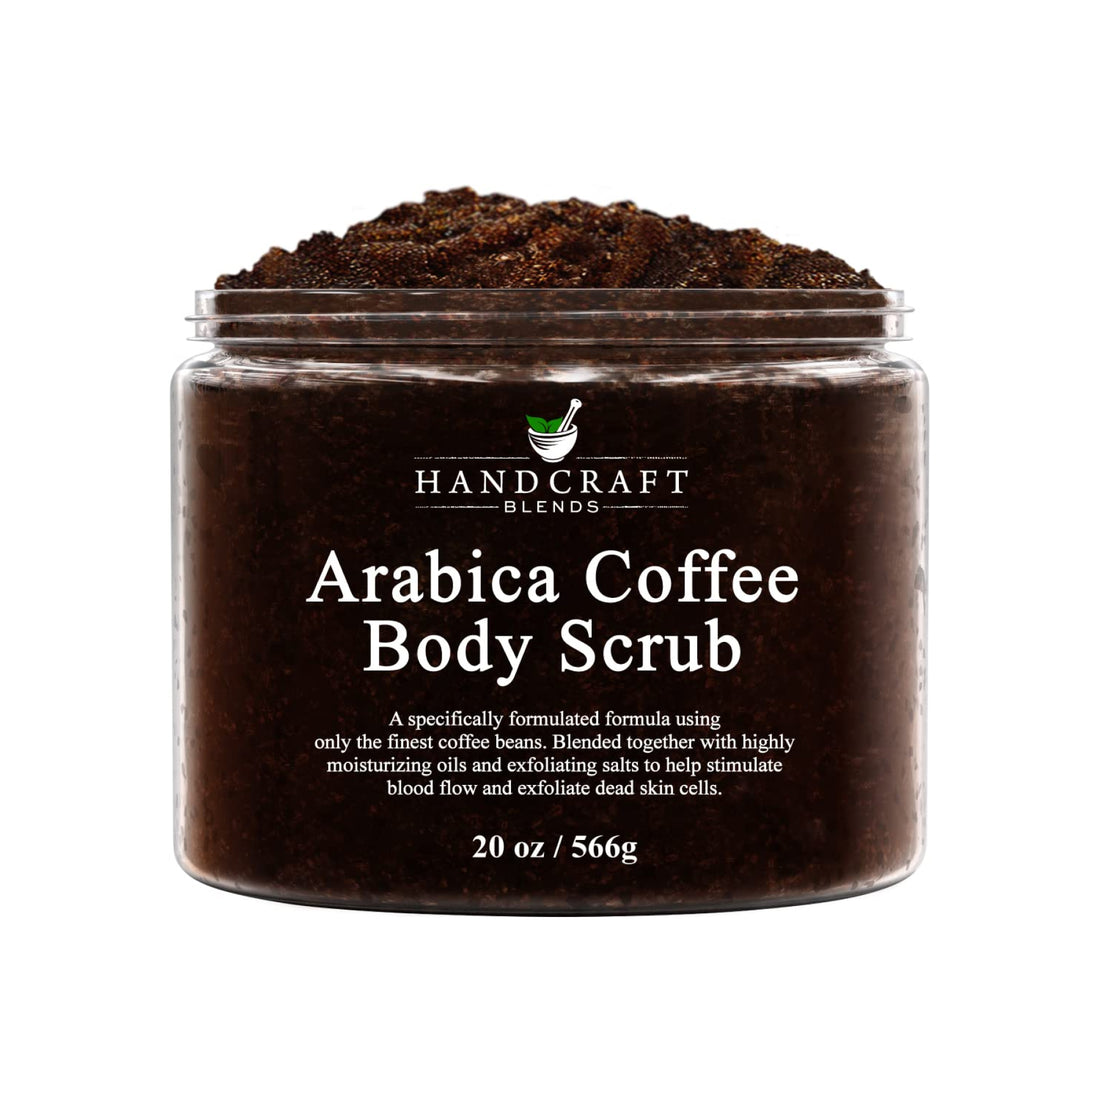 Handcraft Blends Arabica Coffee Body Scrub